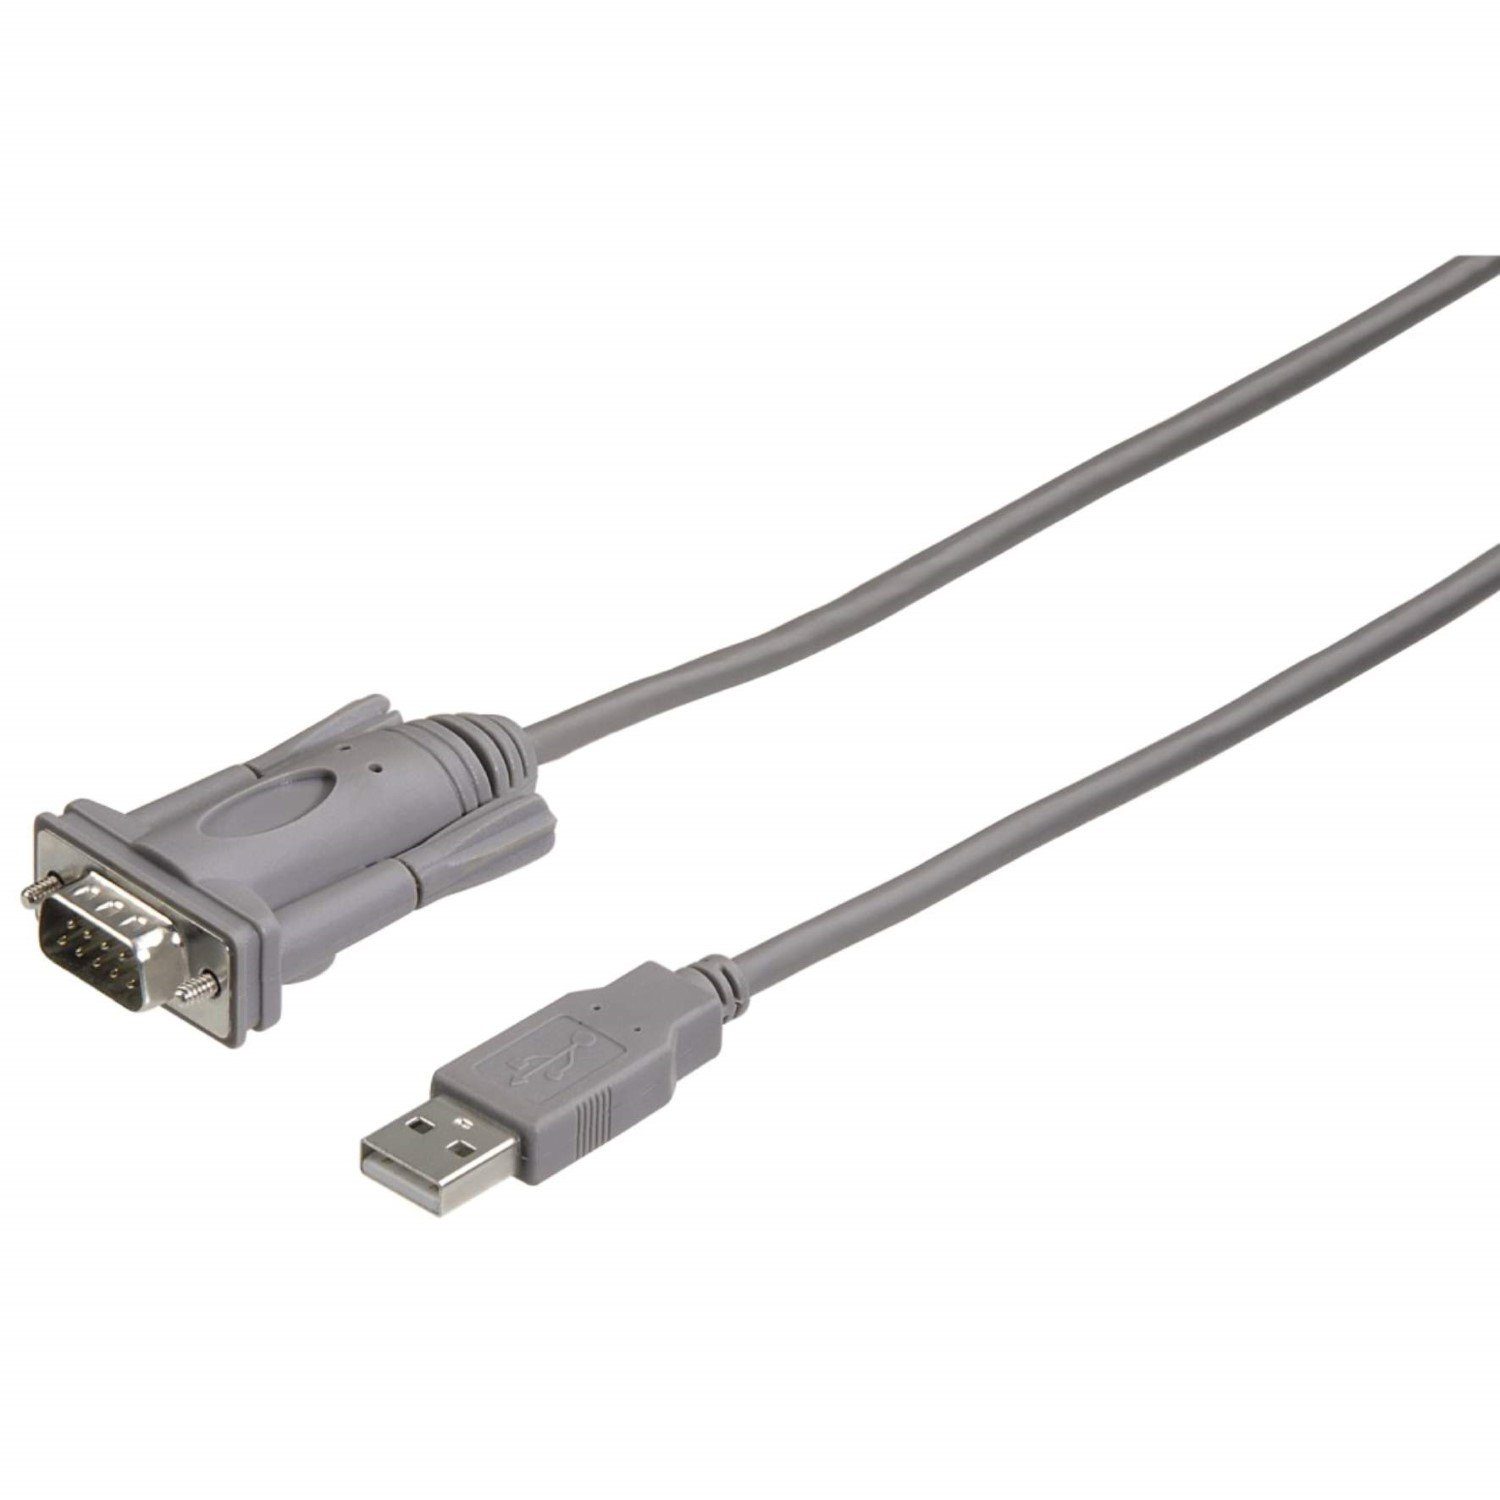 Hama USB auf Seriell 9-Pol Adapter-Kabel 2m Grau USB-Kabel, USB-A-Stecker, (1 cm), Konverter 2m RS323 RS-323 Com-Port DB9 9-Pin für PC Notebook etc.